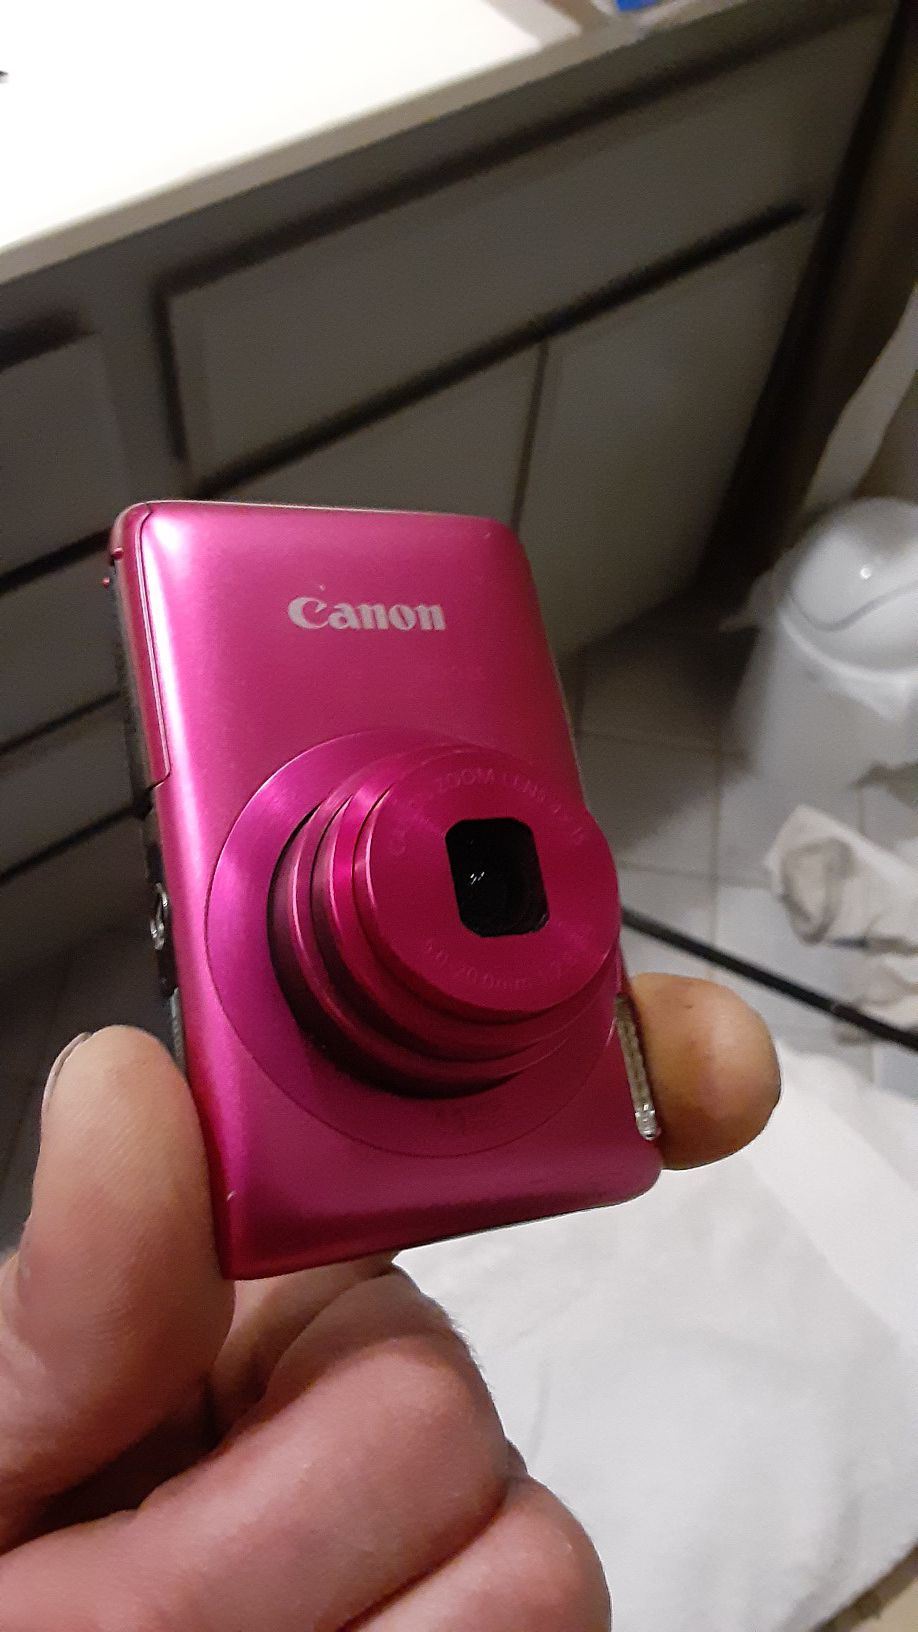 Canon camera 14 mp cardash cam capabilities